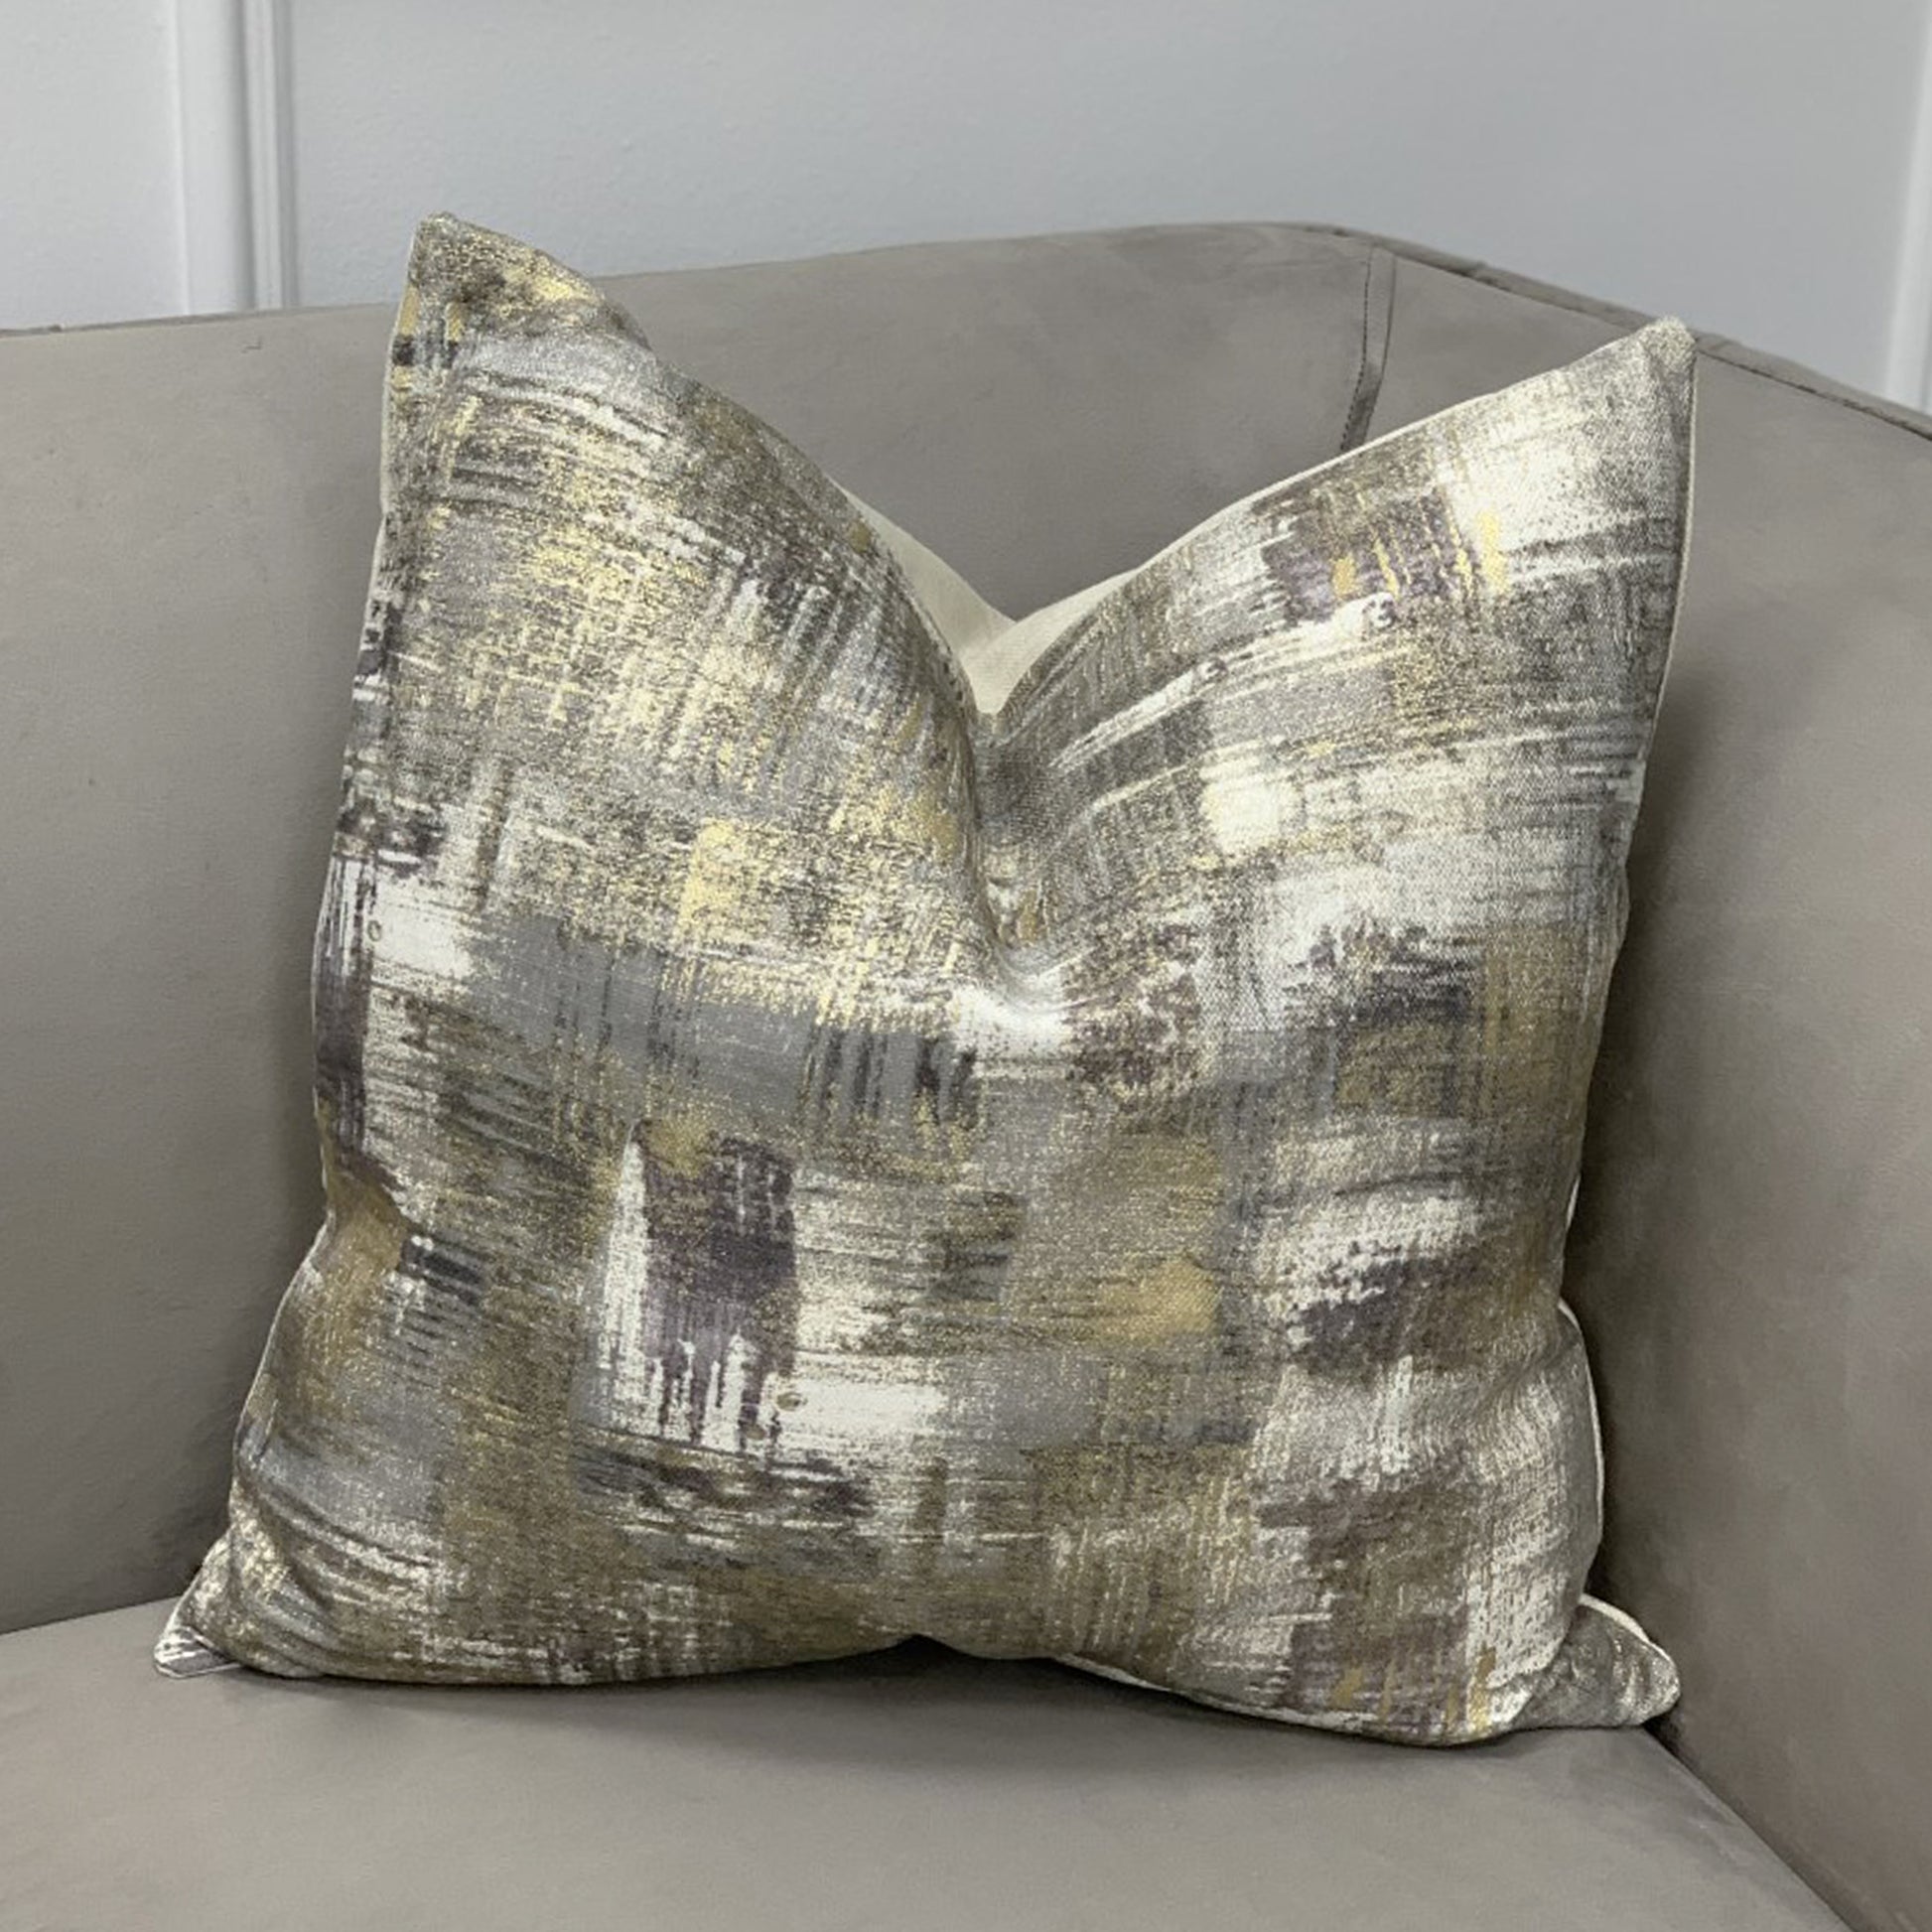 Hailey Gold And Grey Abstract Cushion